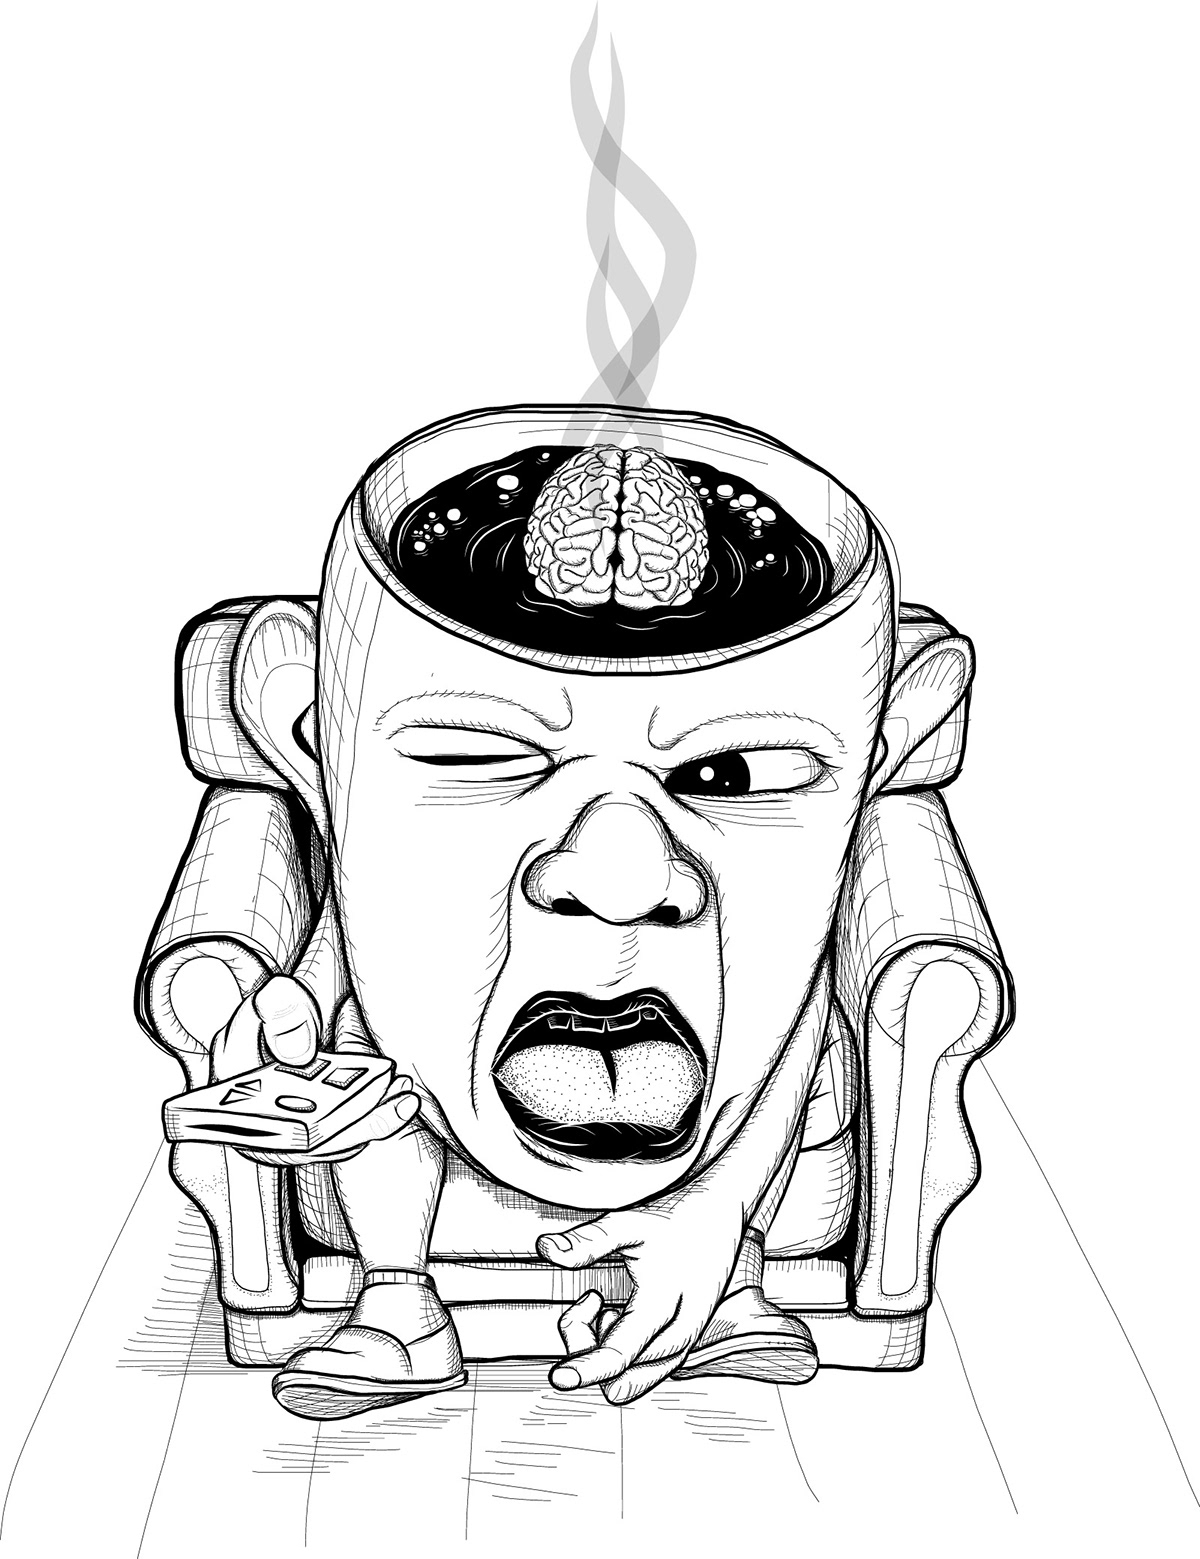 blur adobe ideas coffe & tv brain potato couch iPad vectorial illustration hand illustration